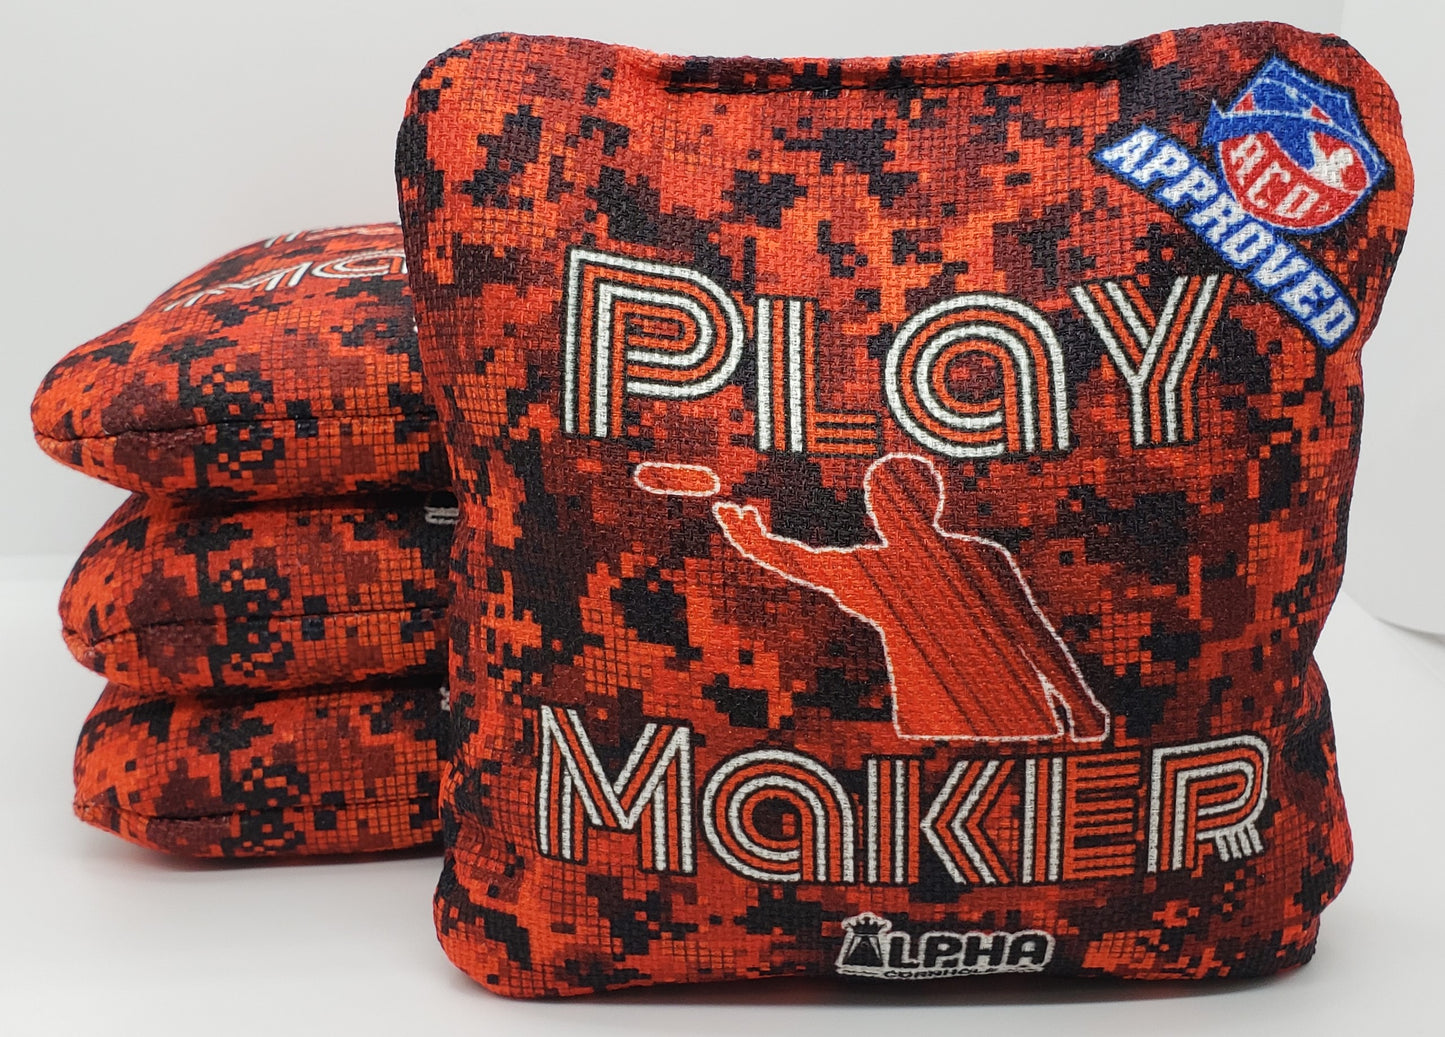 Alpha Play Maker Bags - Digi Red - Set of (4) Pro Cornhole Bags